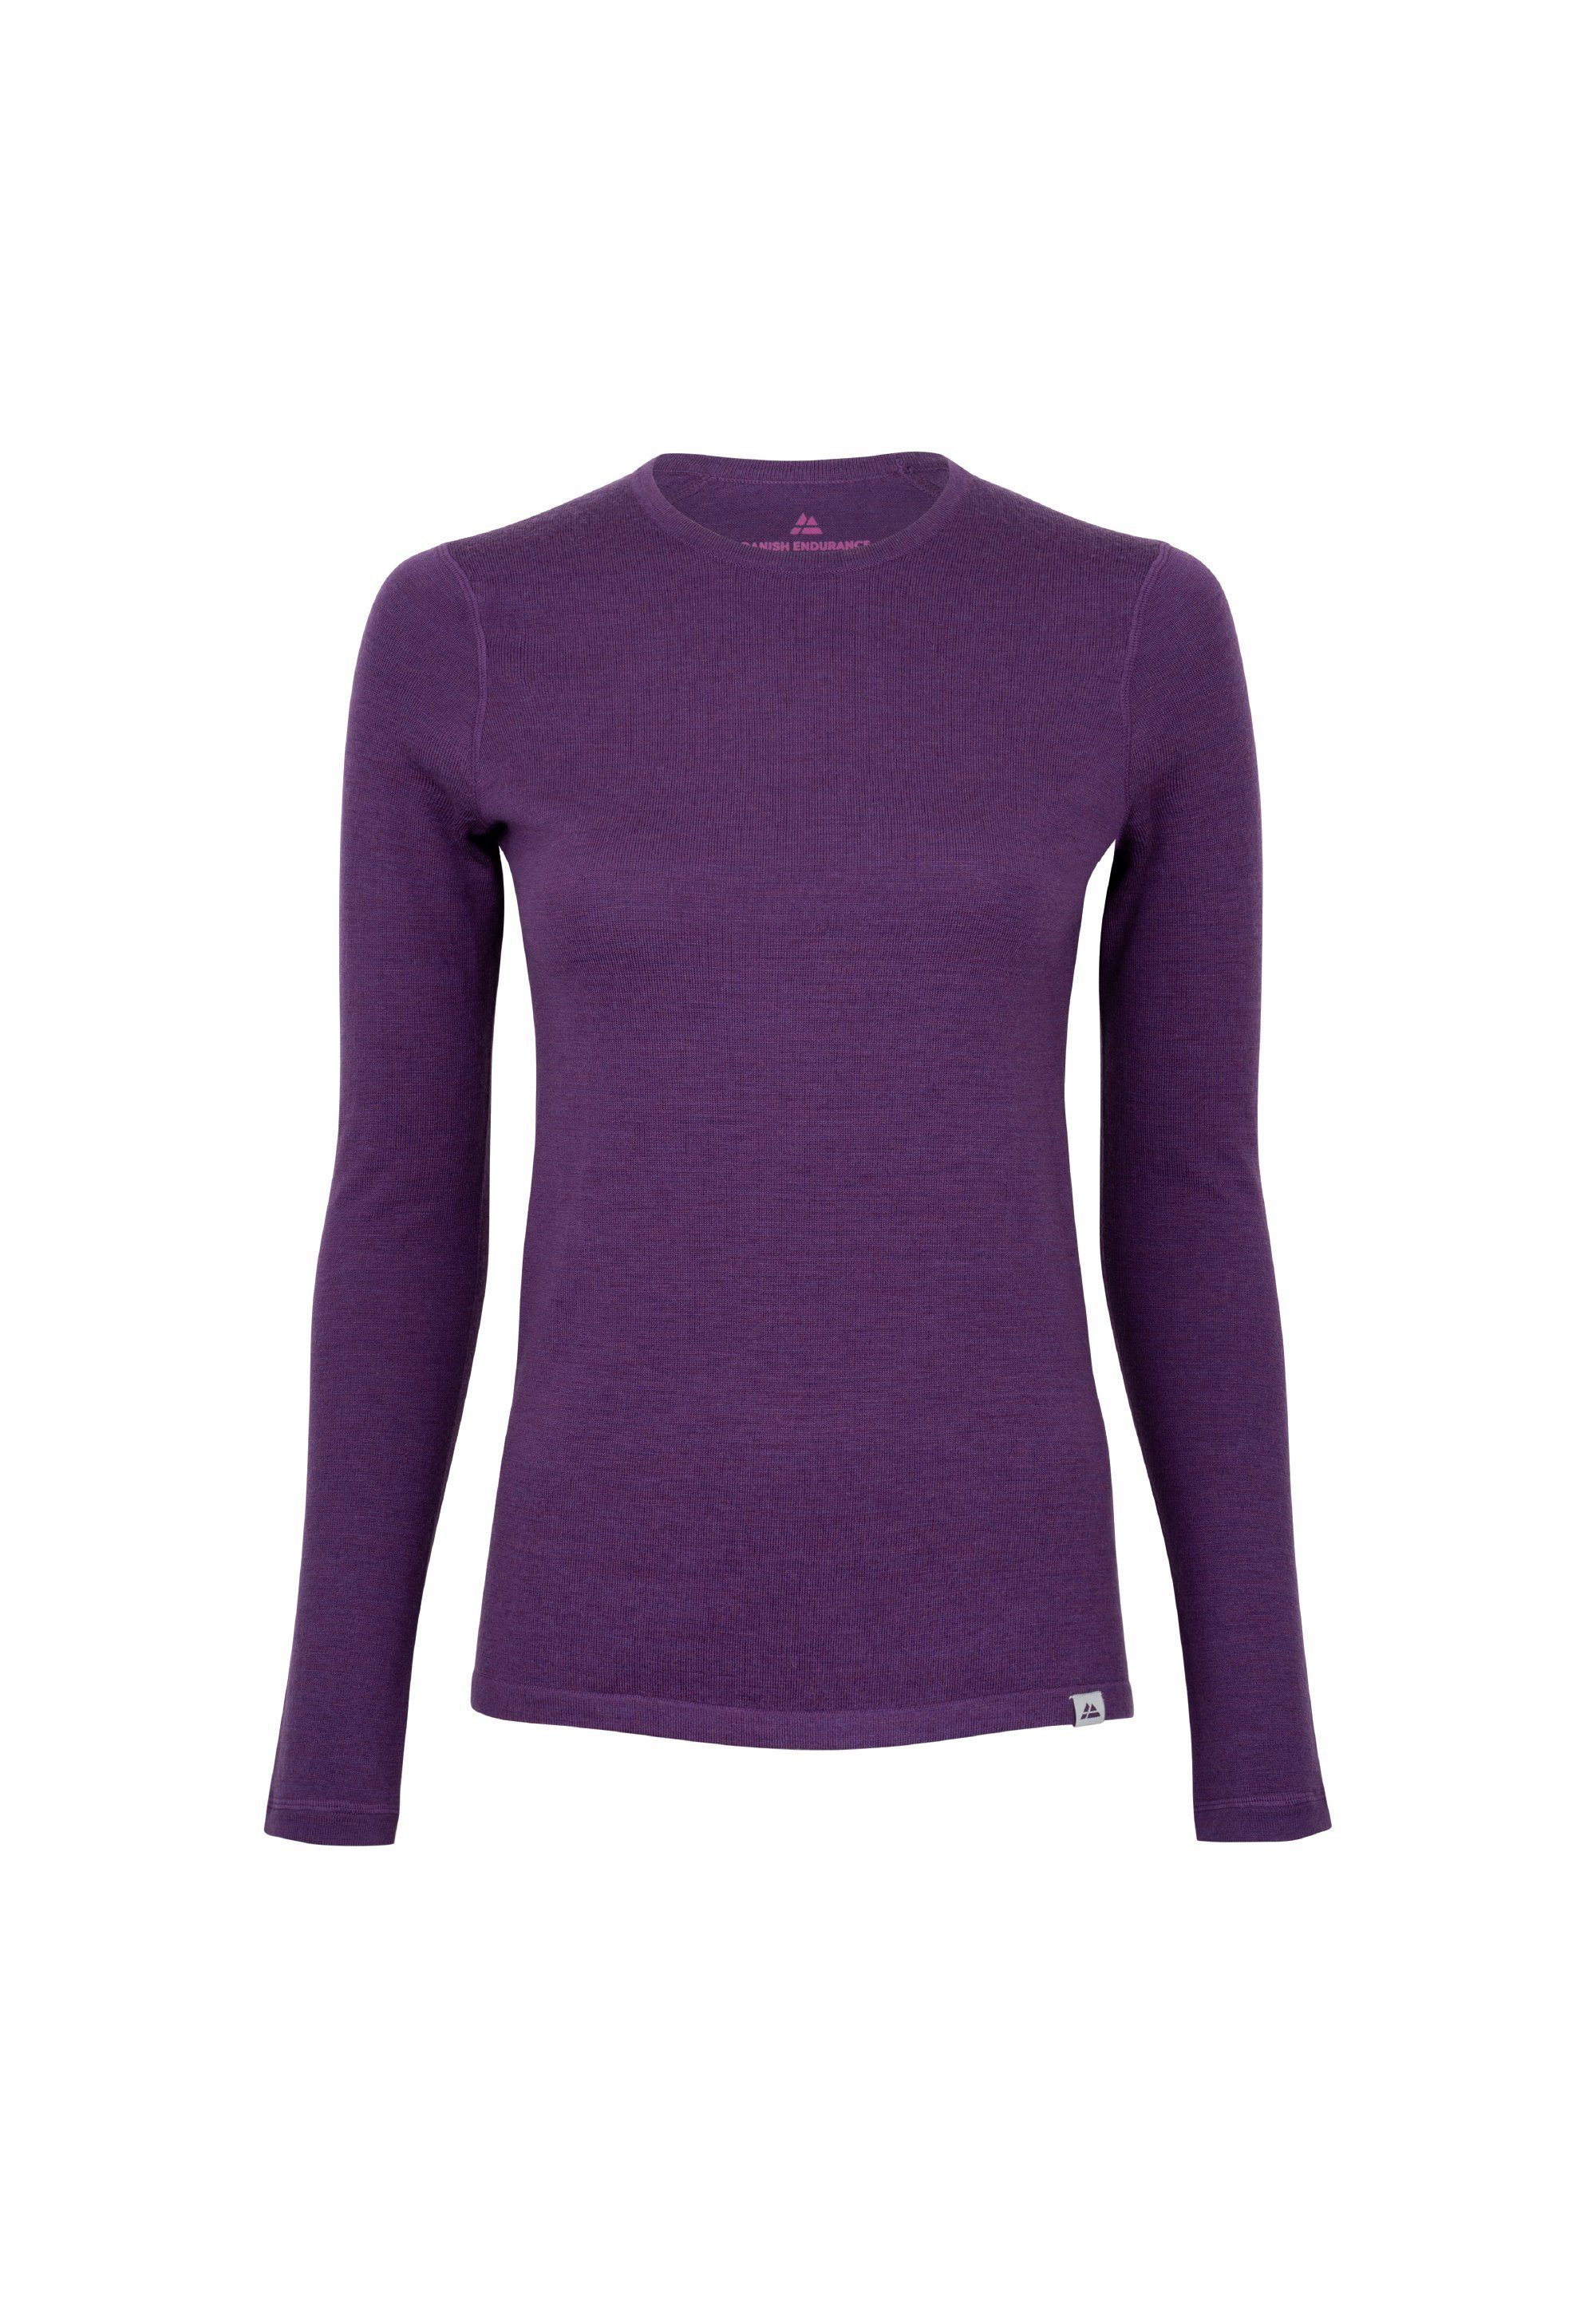 ENDURANCE Damen purple Funktionsshirt Merino DANISH Temperaturregulierend Thermounterhemd